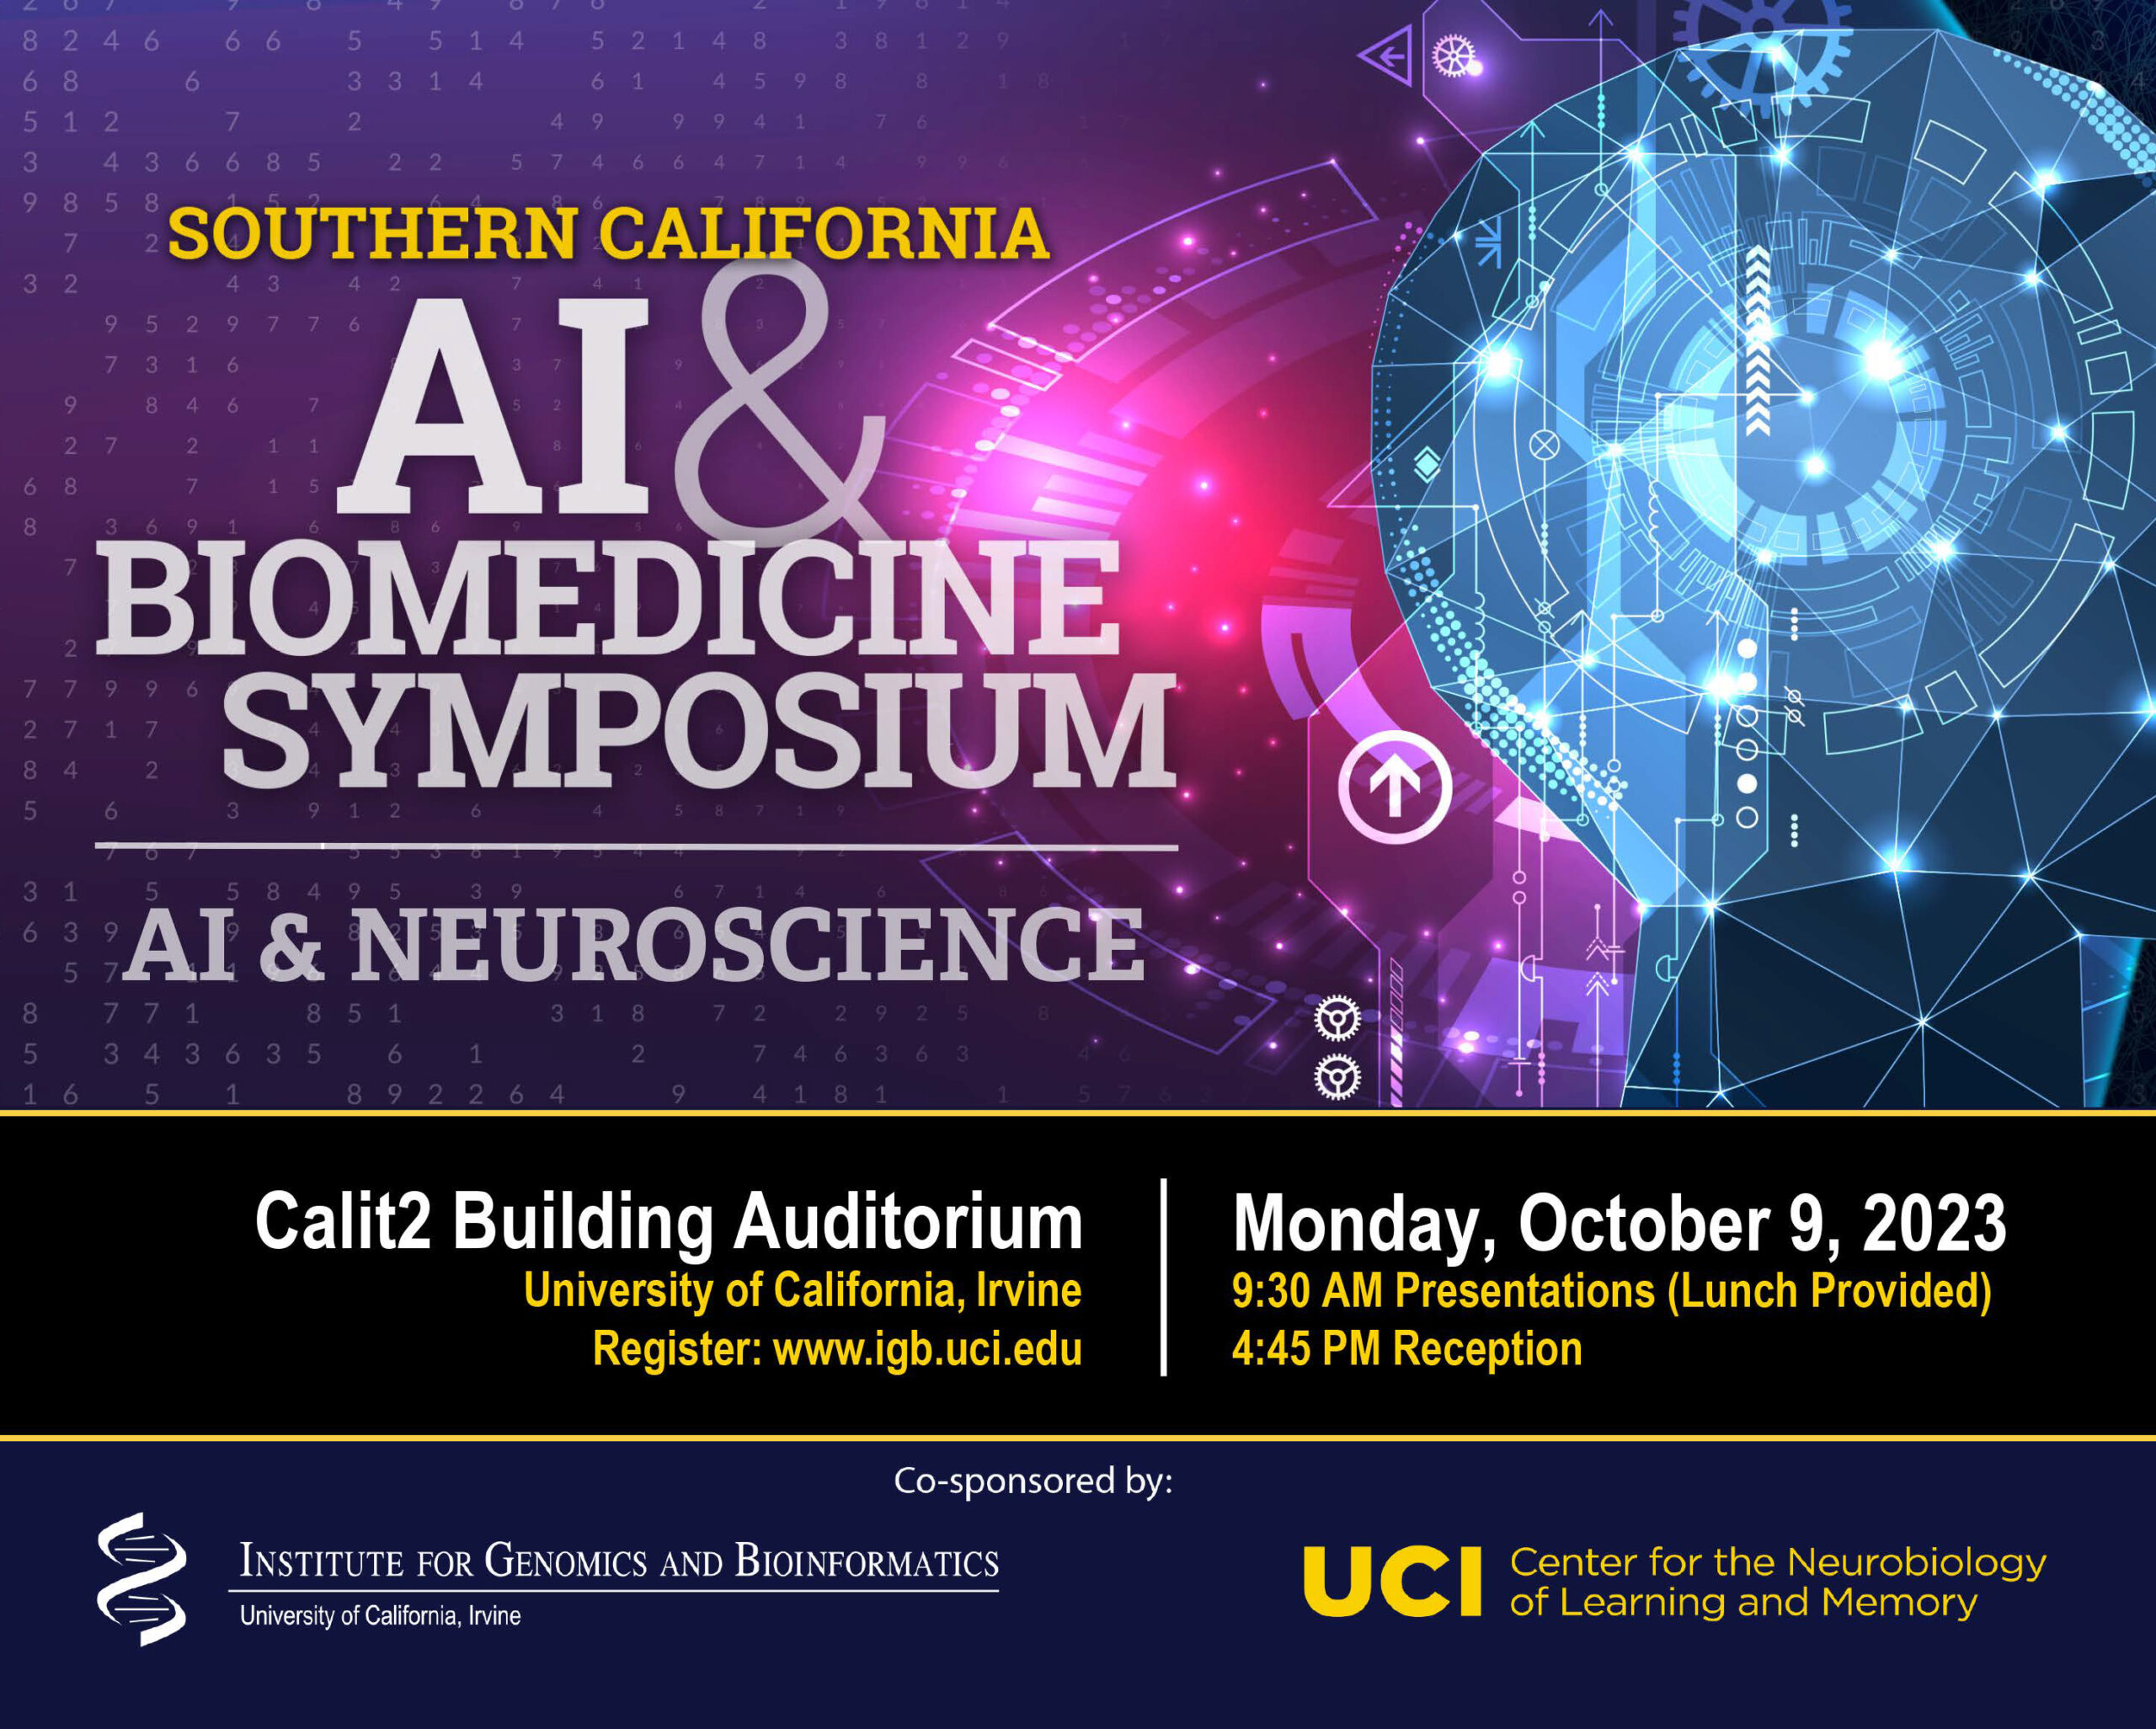 AI and Biomedicine symposium -- Monday, October 9, 2023